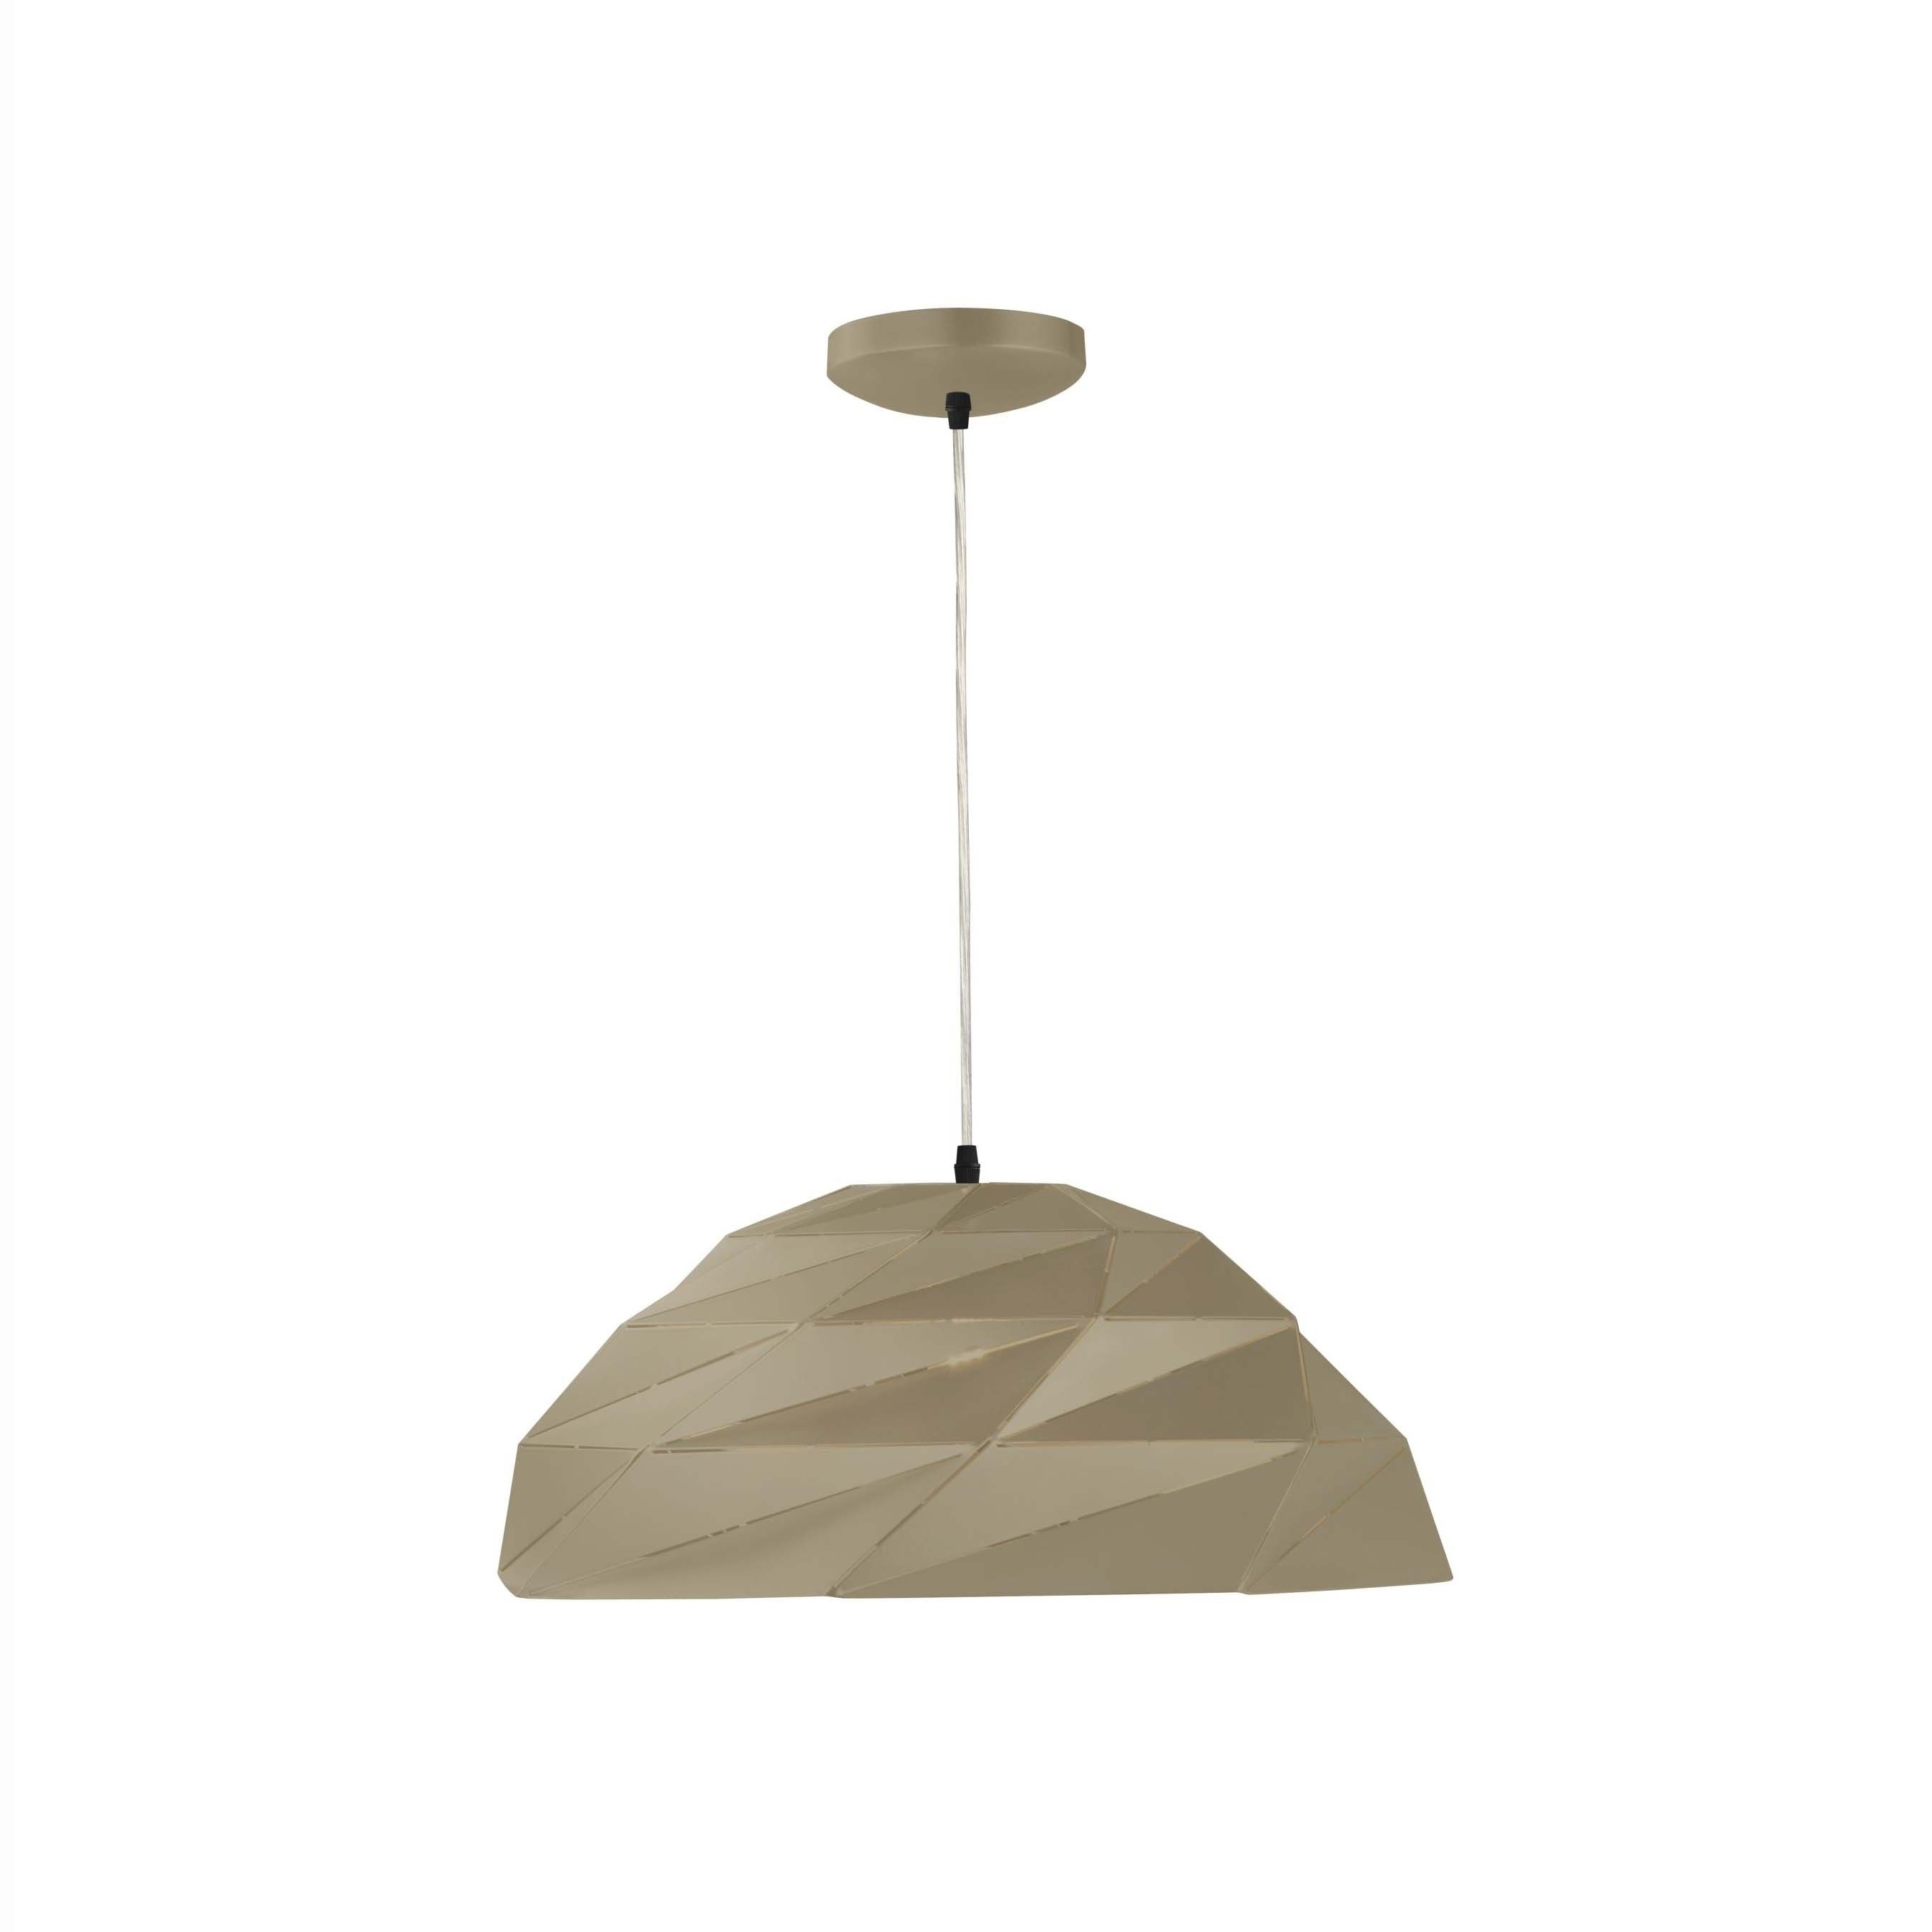 salami Intens hulp in de huishouding Searchlight Origami - hanglamp - Ø 47 x 150 cm - metallic goud | Lichtkoning